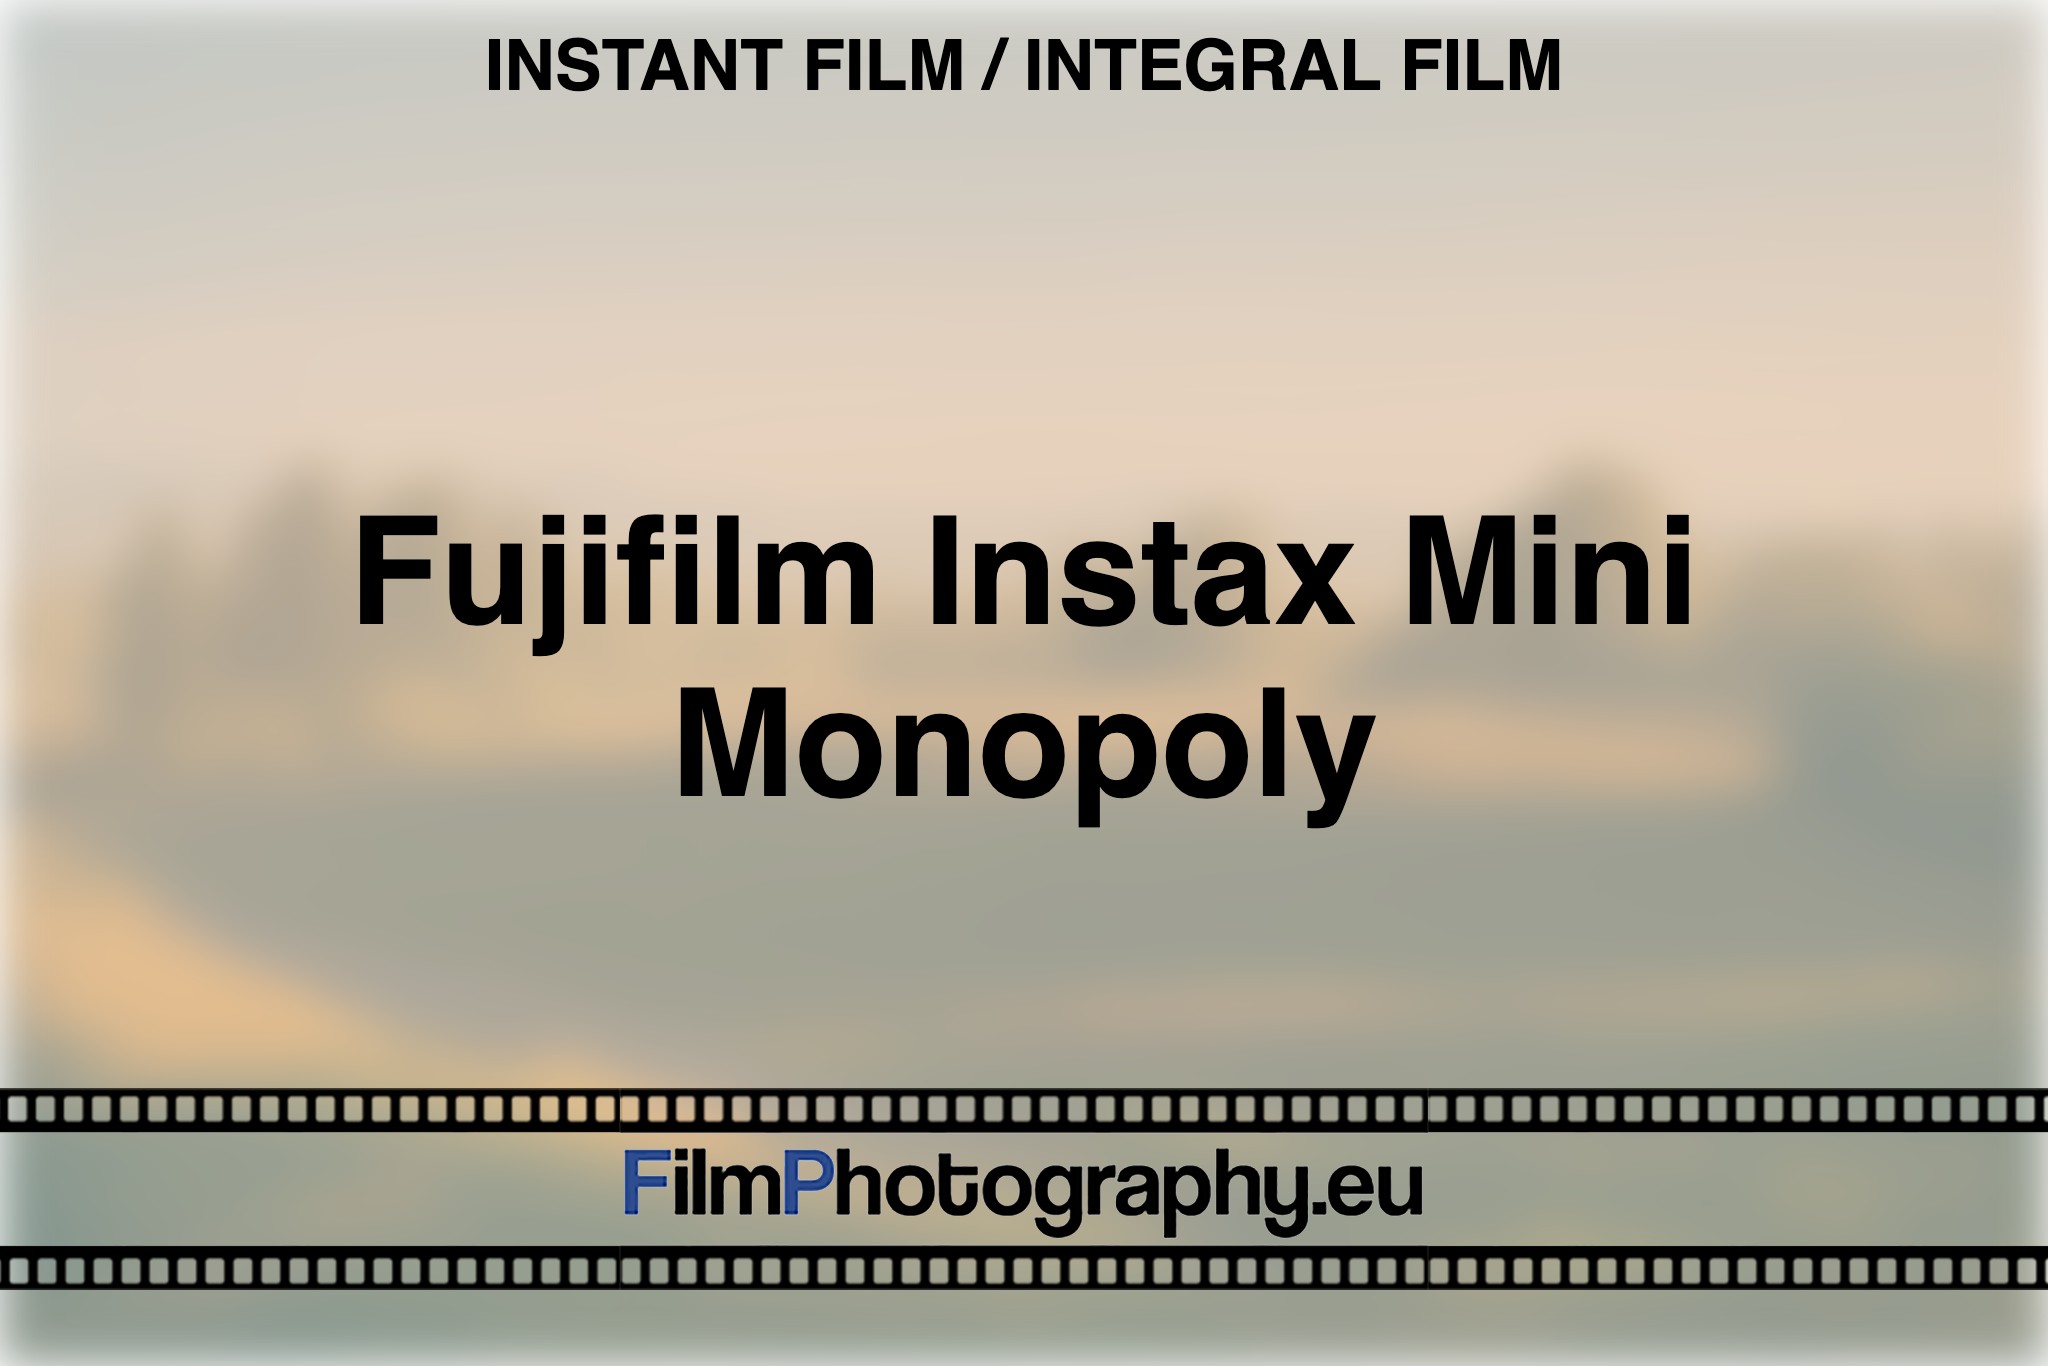 fujifilm-instax-mini-monopoly-instant-film-integral-film-bnv